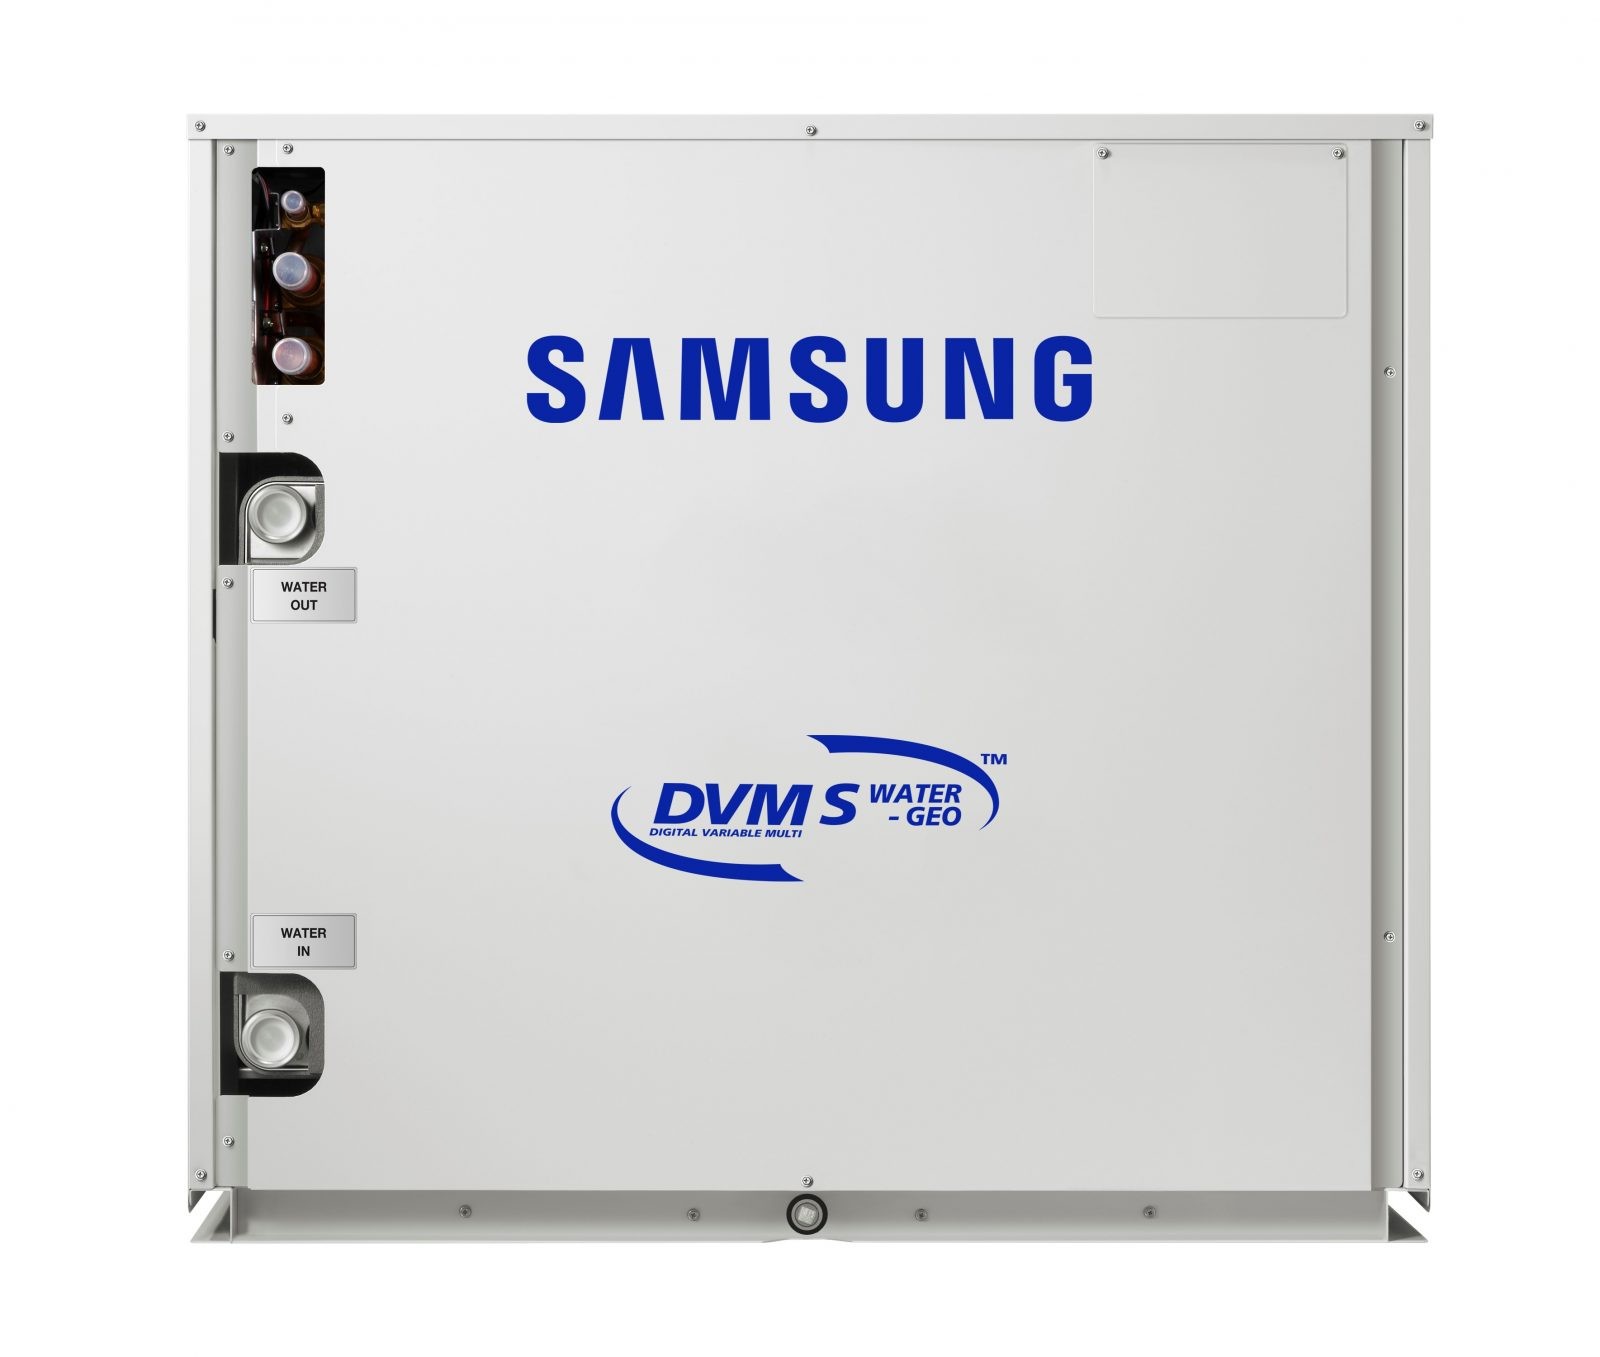 Външно тяло Samsung DVM S Water AM400MXWANR